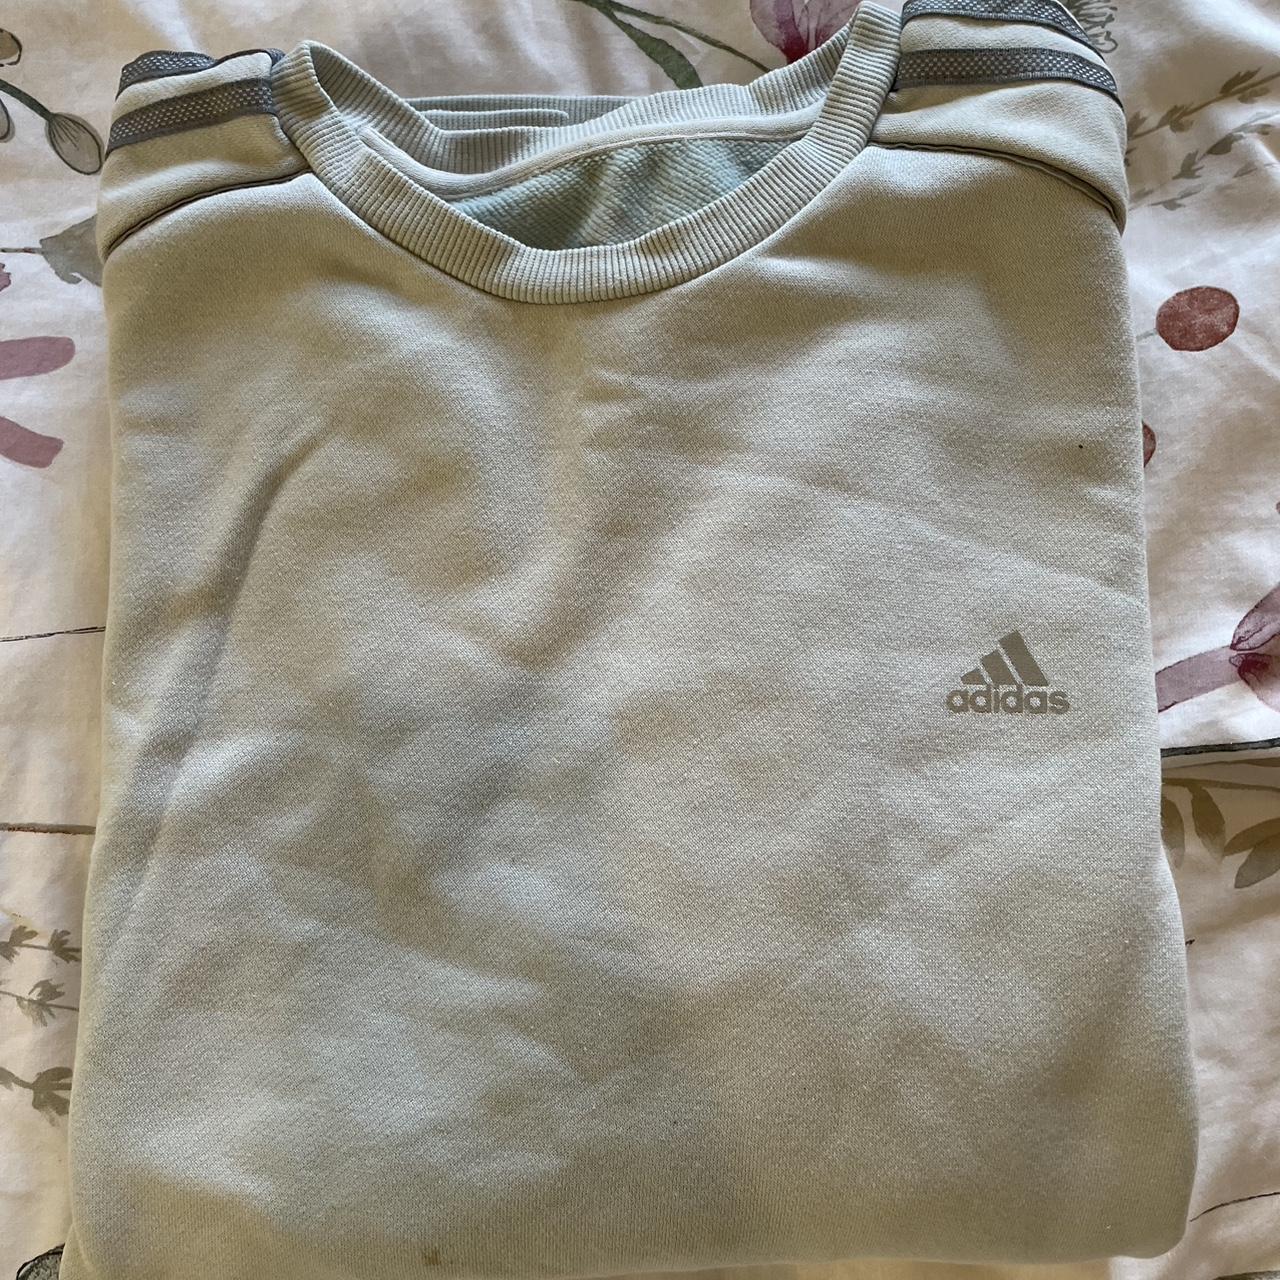 vintage adidas sweatshirt small stain on front - Depop